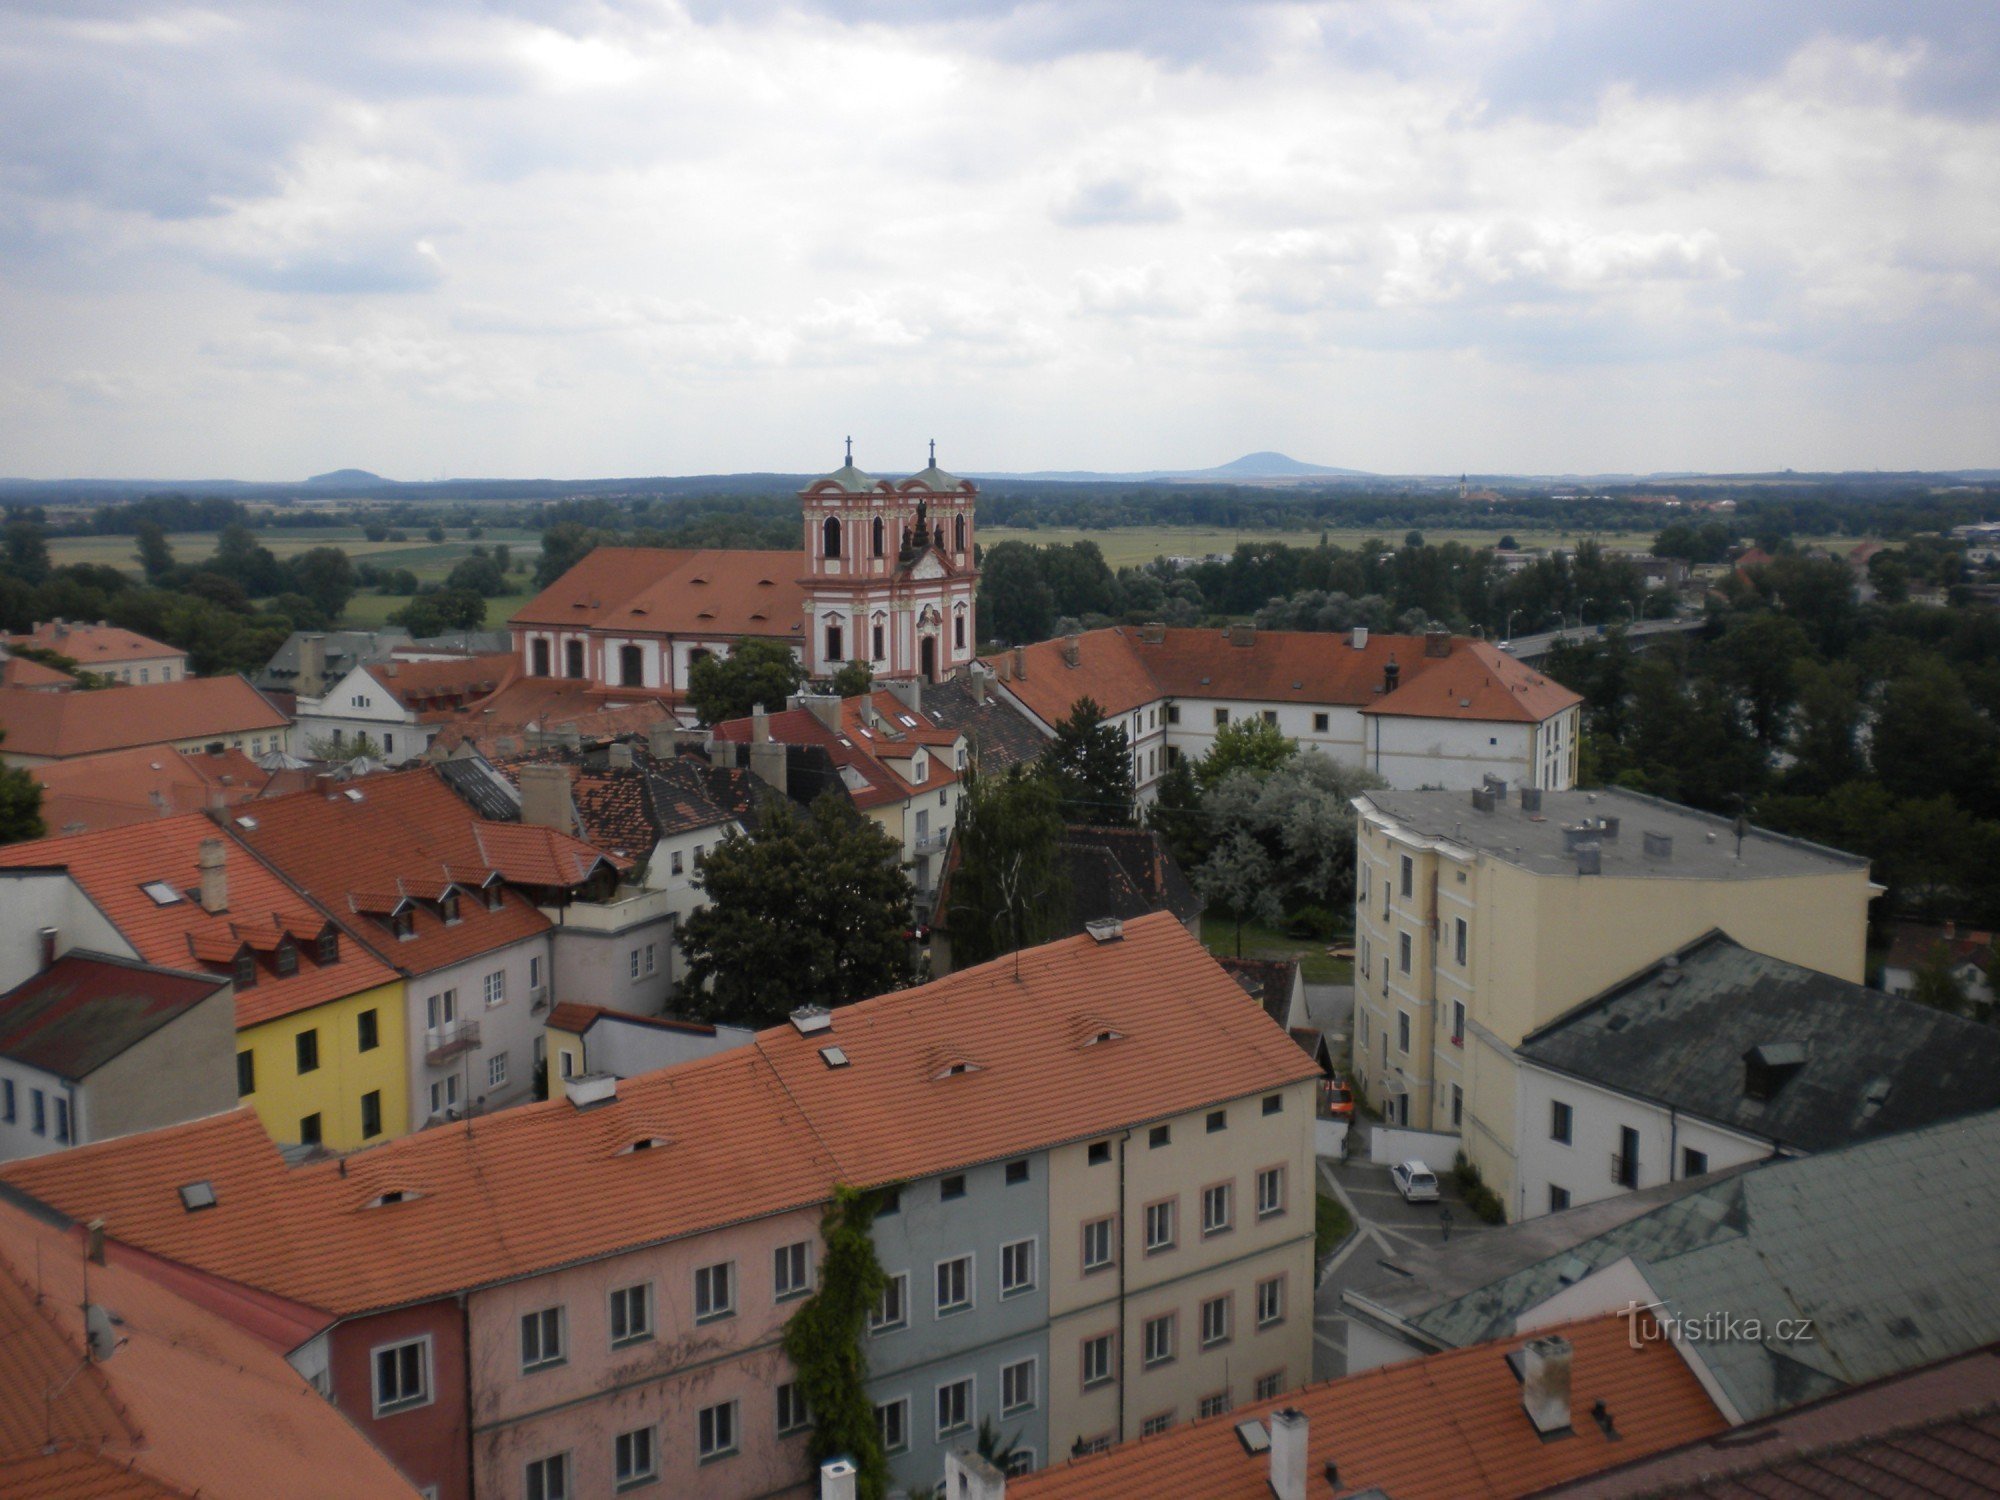 Zgodovinske zgradbe mesta Litoměřice.